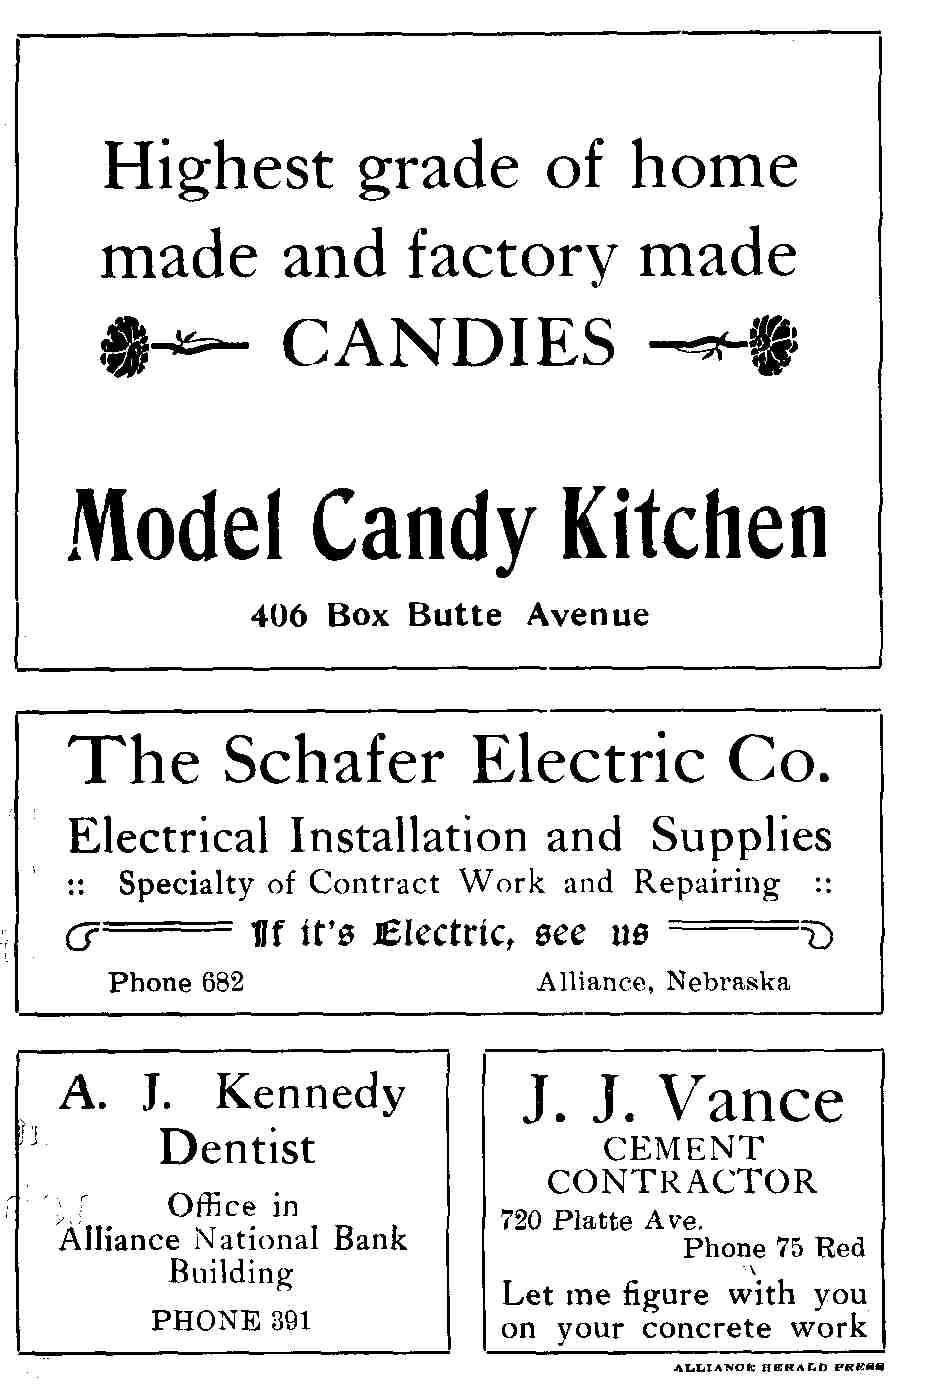 Model Candy Kitchen